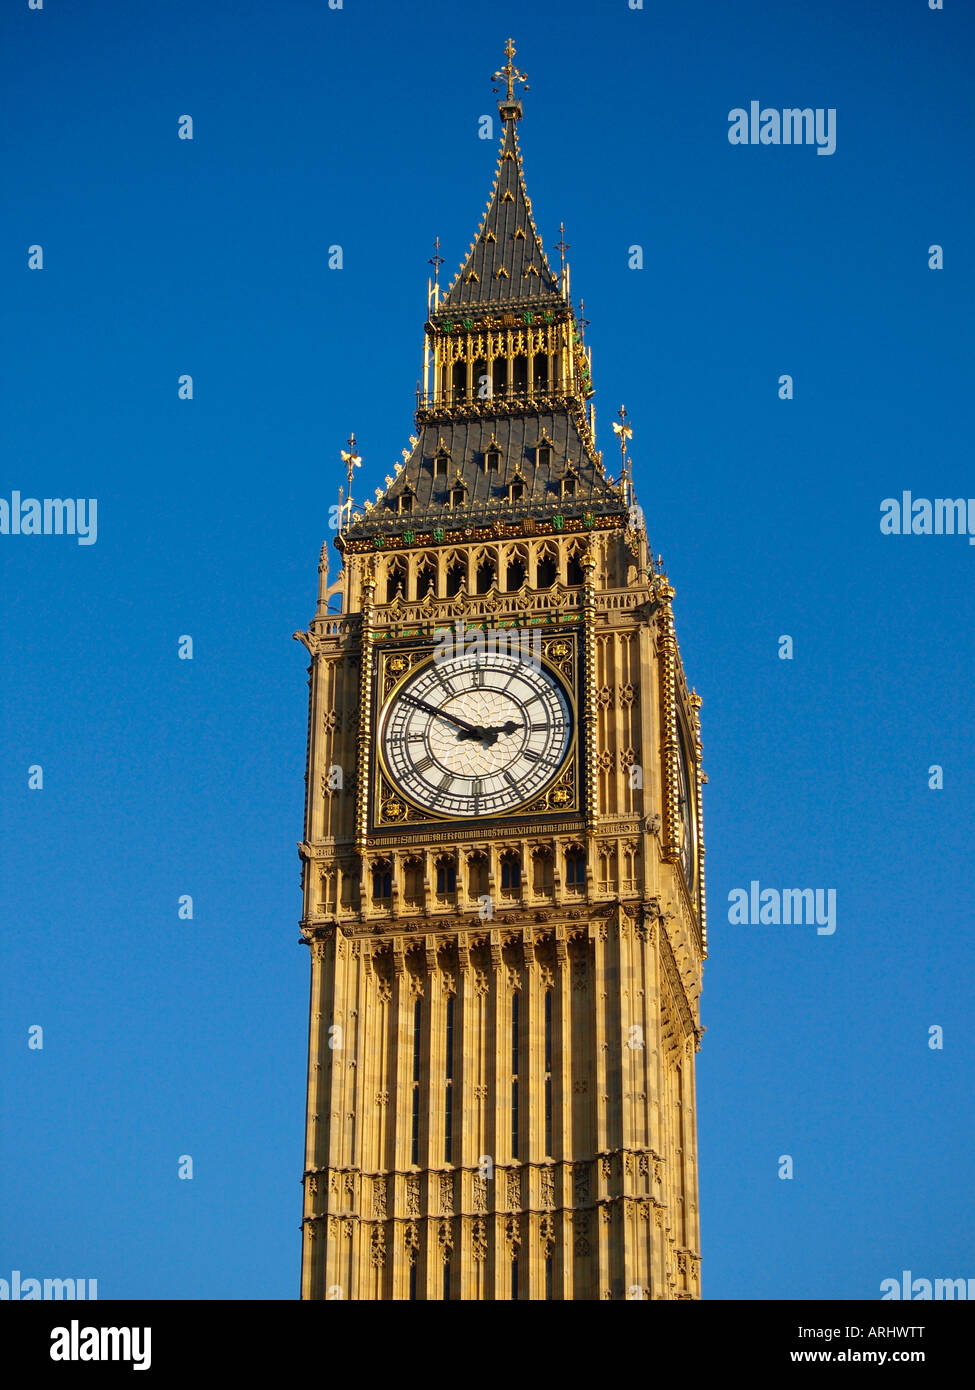 The Palace of Westminster Big Ben London England UK Stock Photo